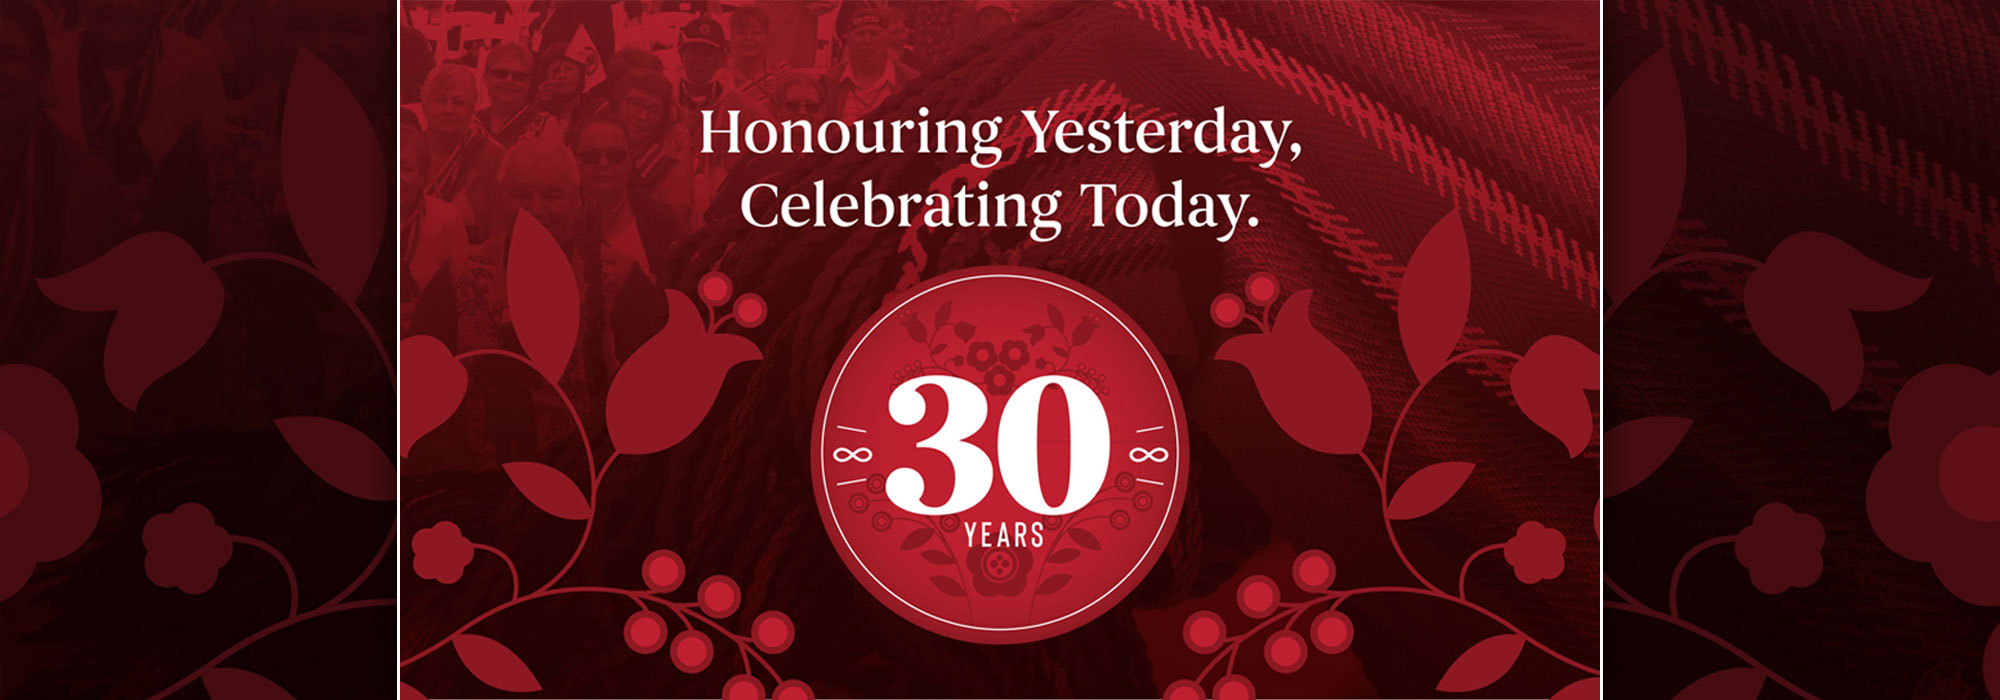 30 Years - Honouring Yesterday, Celebrating Today.